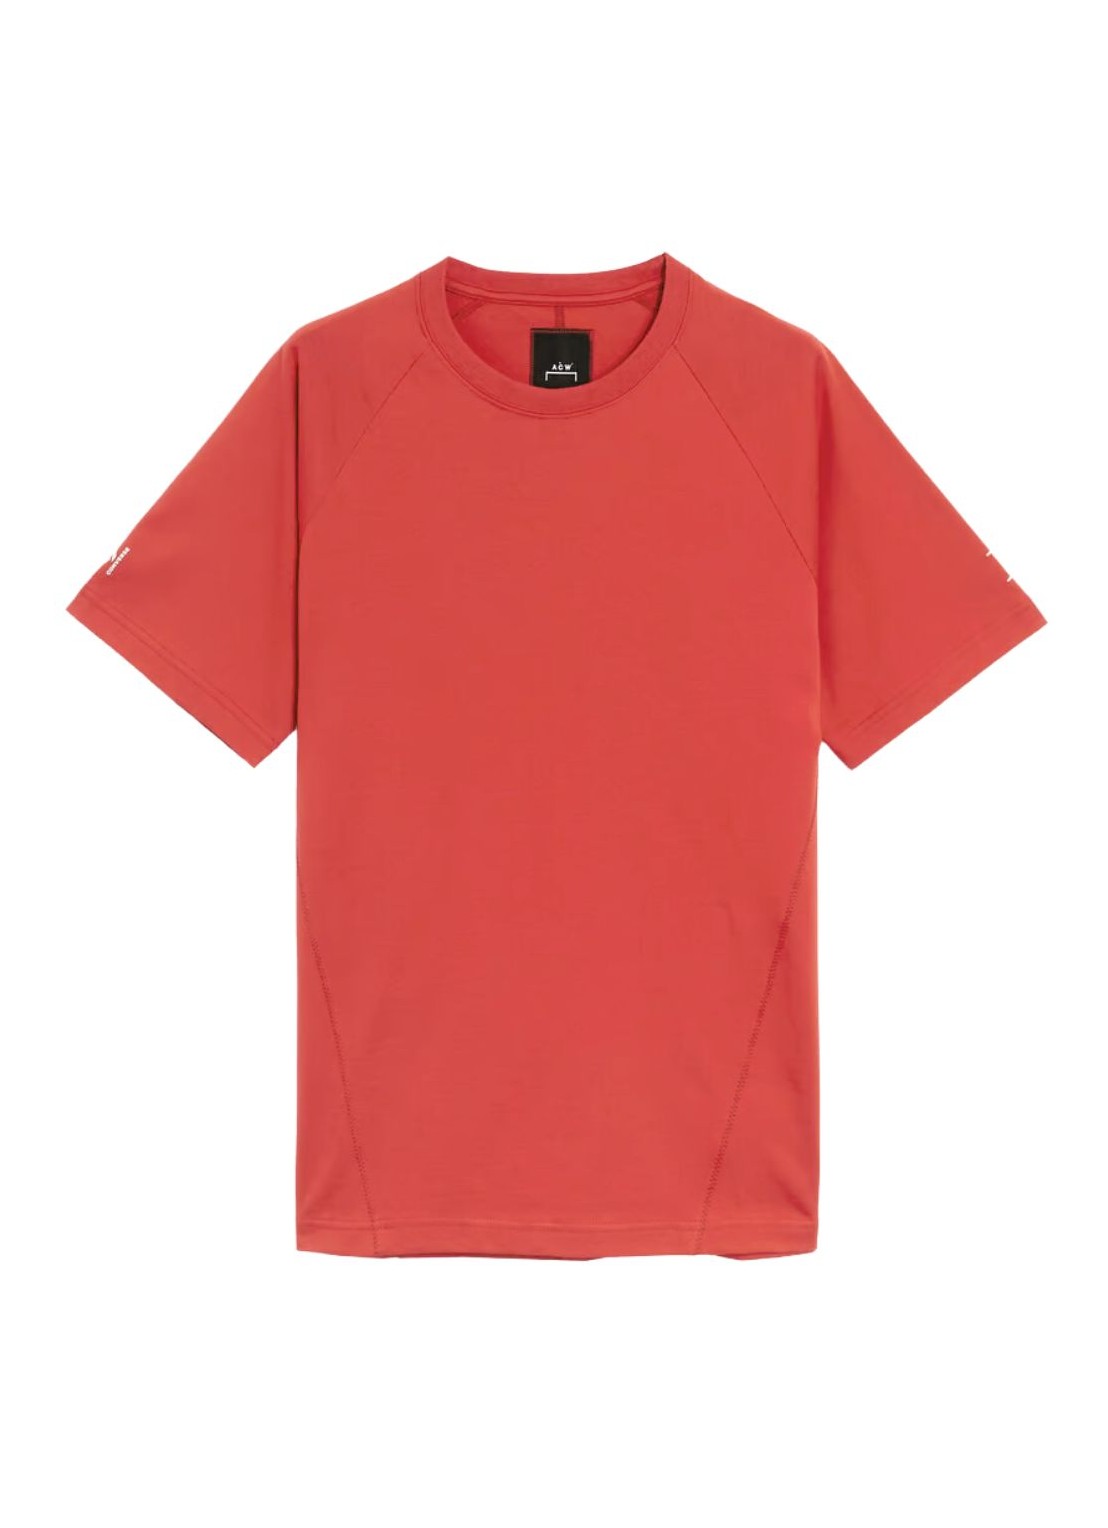 Camiseta converse x a-cold-wall t-shirt mantee - 10026876 a01 talla rojo
 